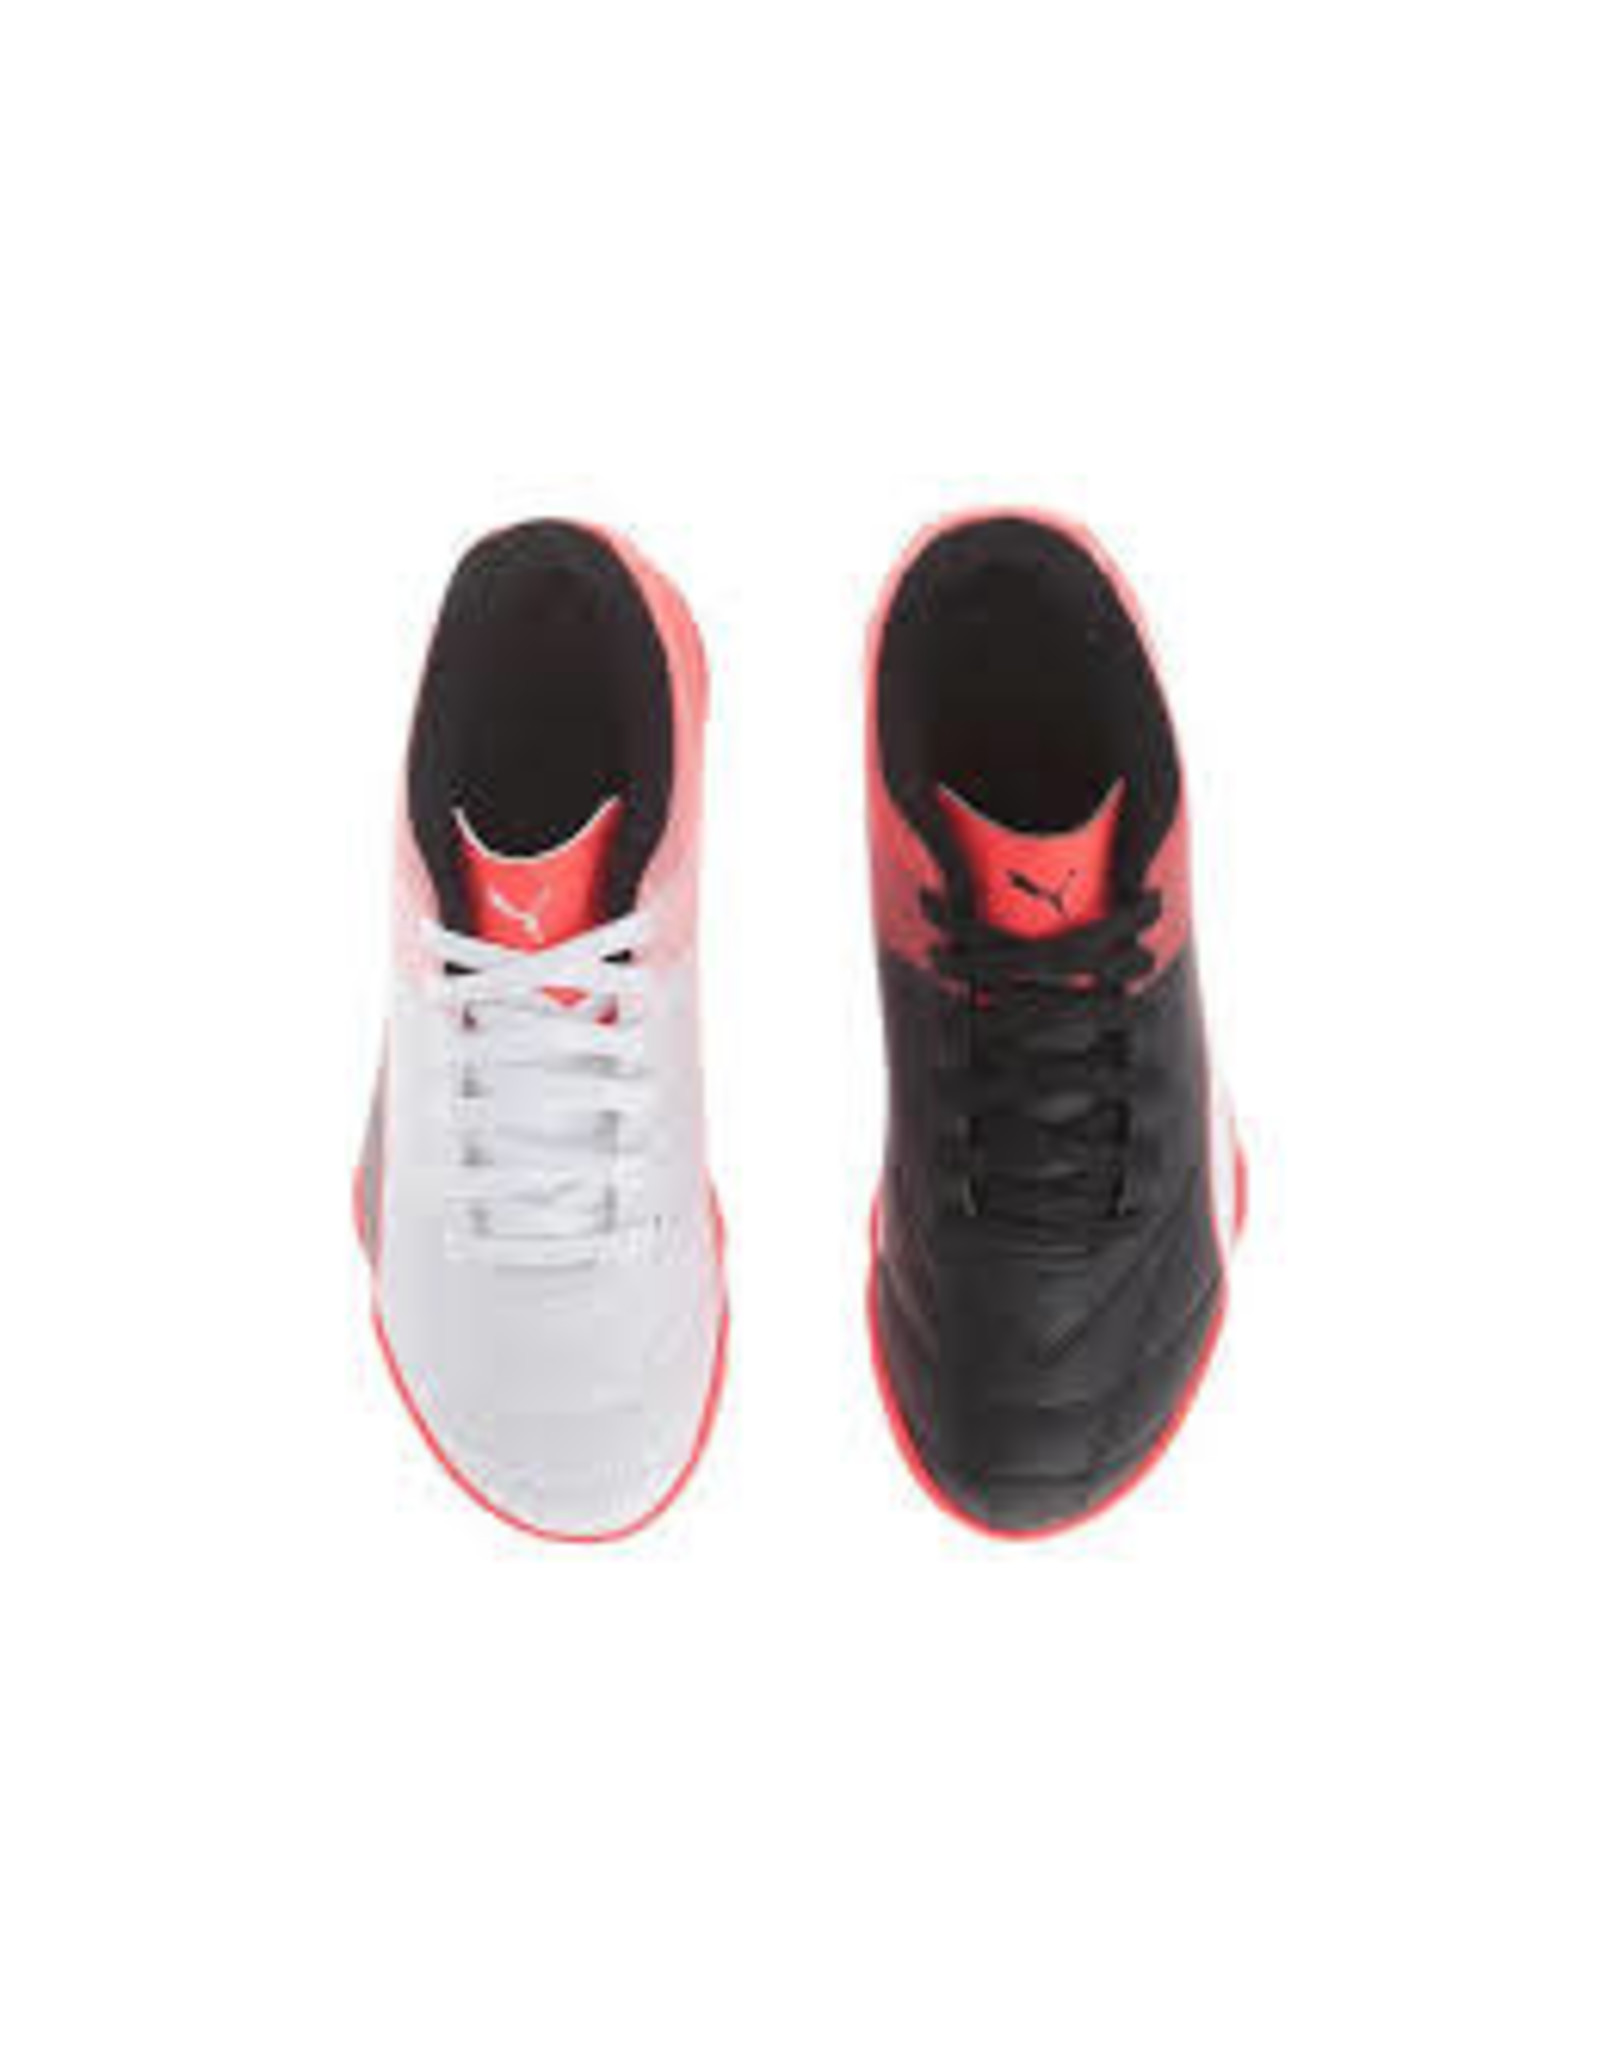 puma white red shoes